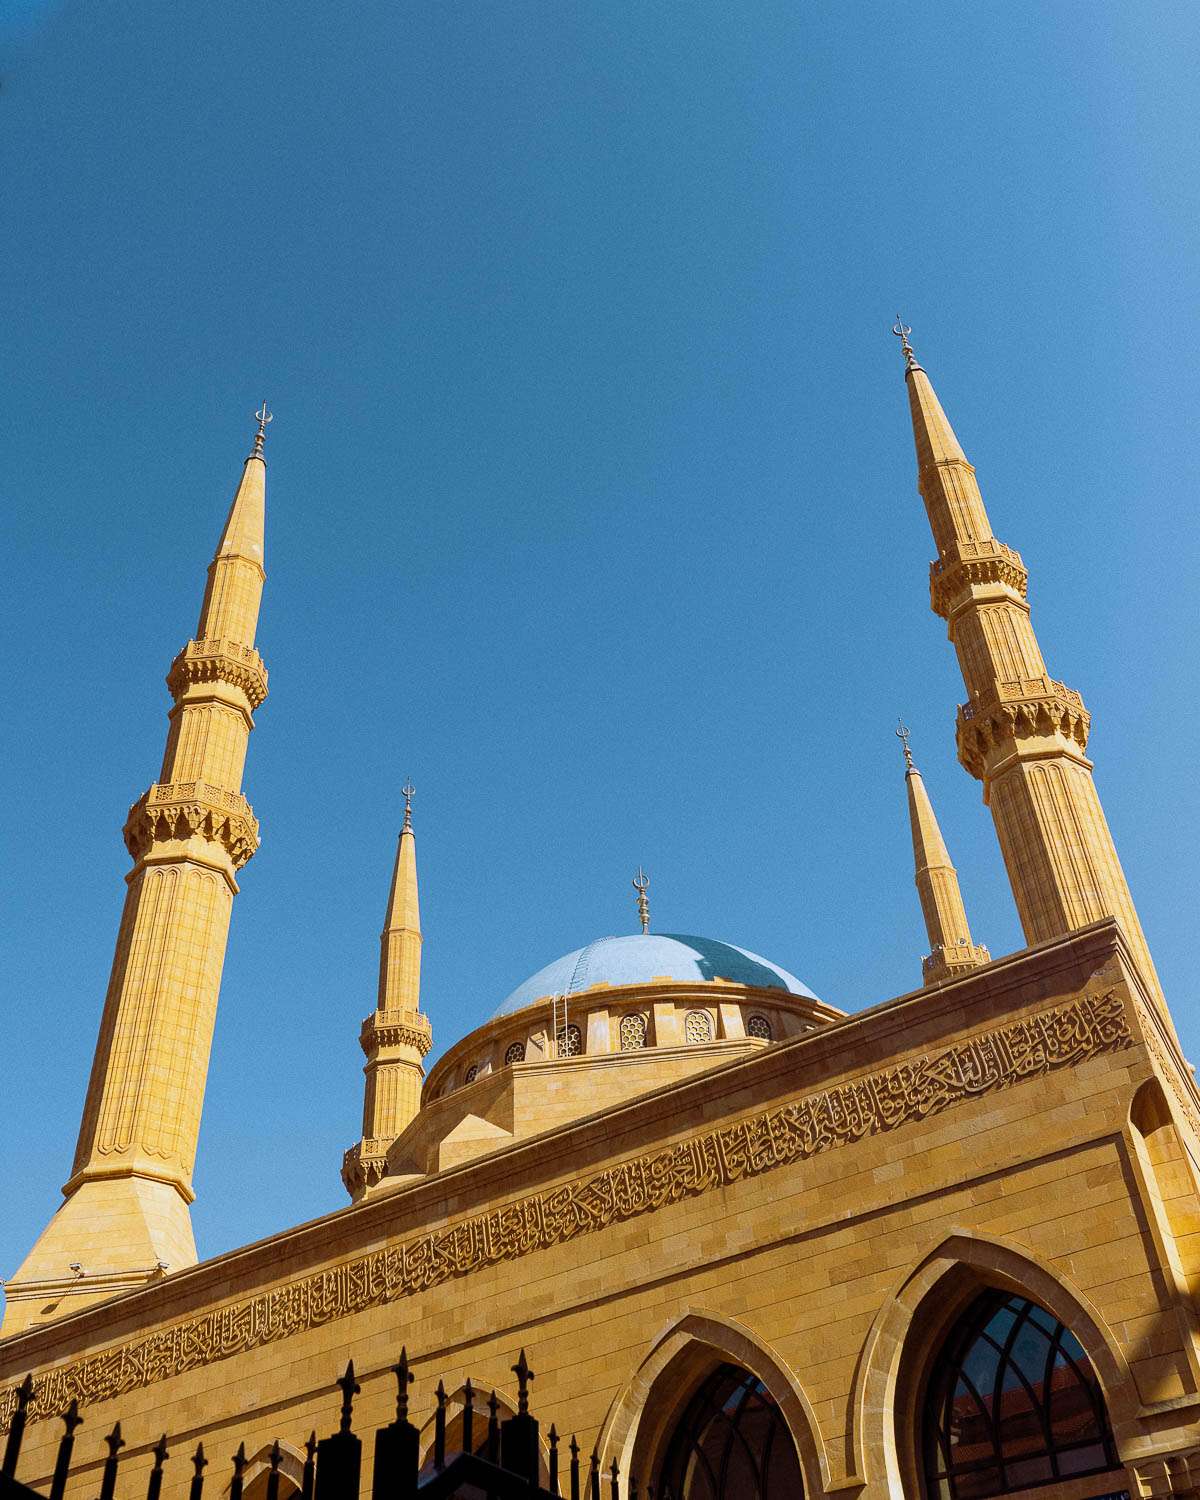 The Al-Omari Grand Mosque in Beirut